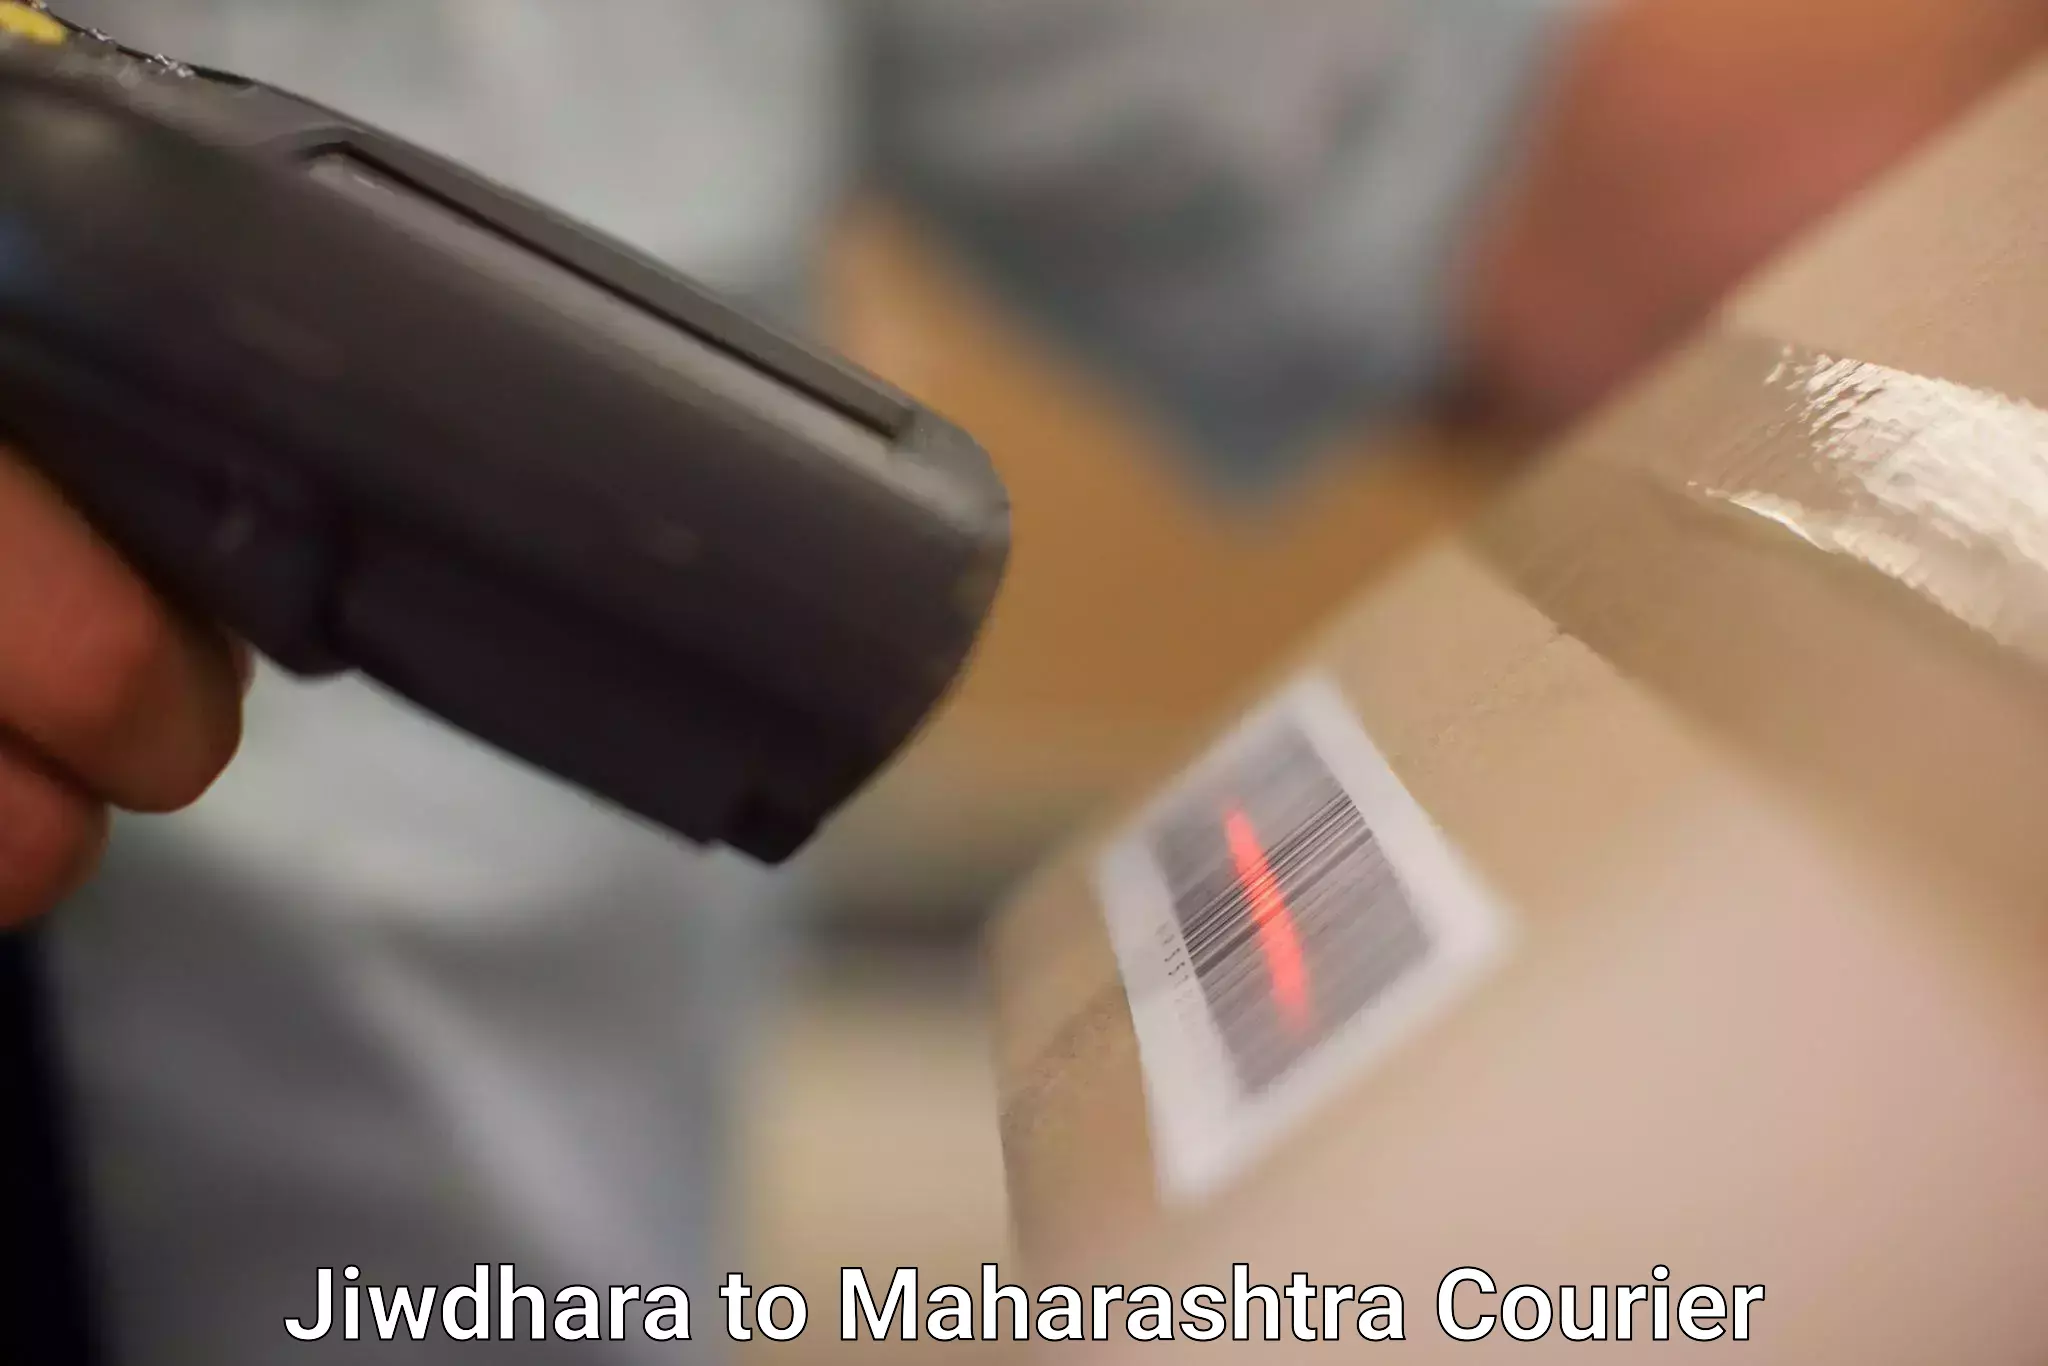 Package delivery network Jiwdhara to Maharashtra